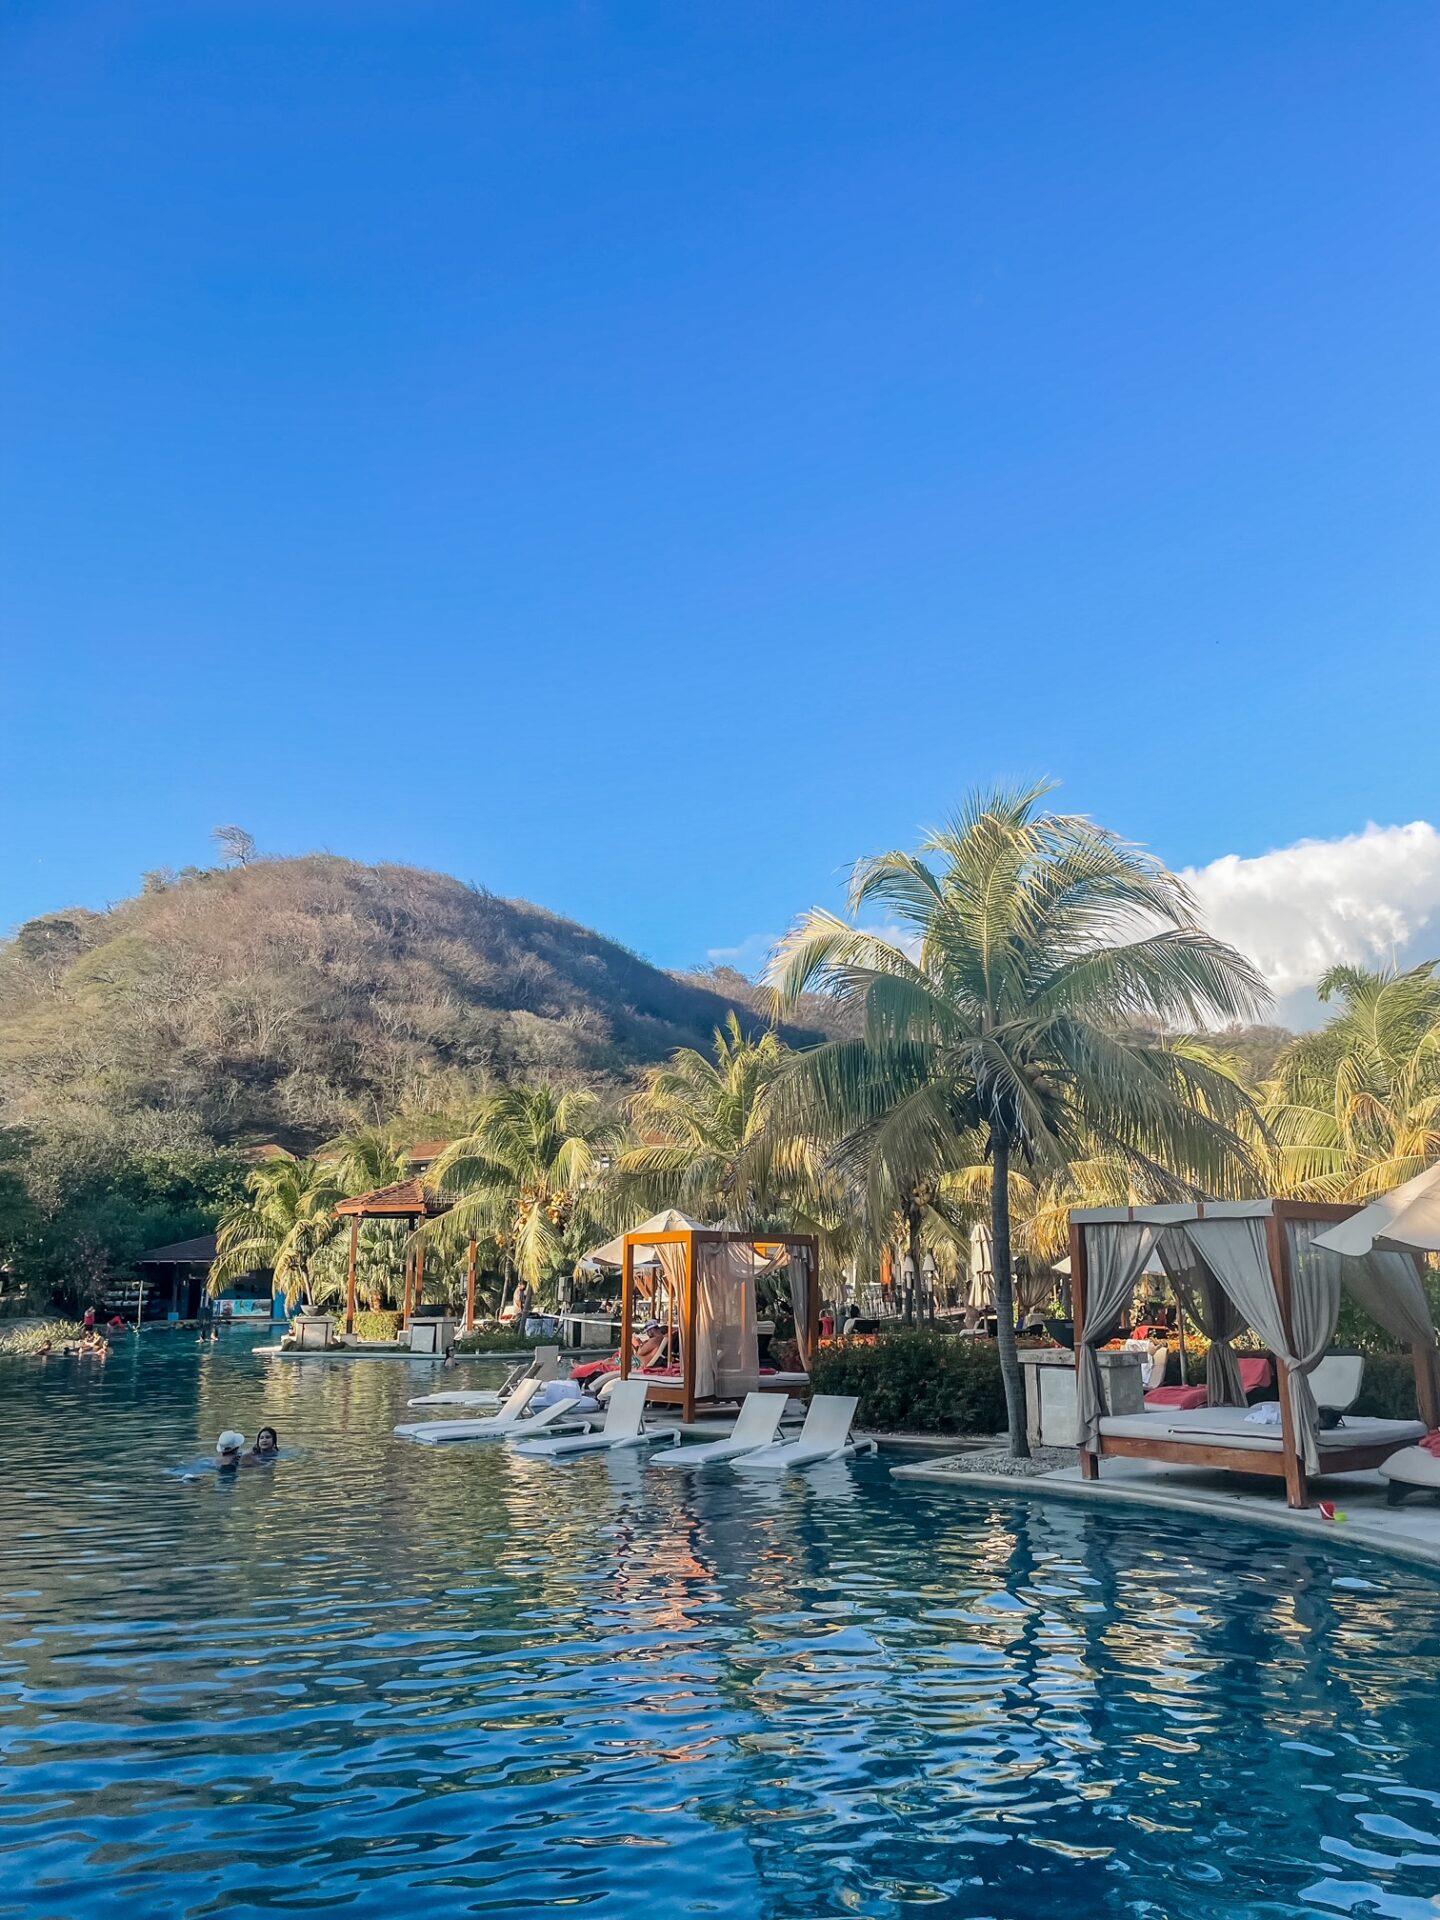 DREAMS LAS MAREAS COSTA RICA - Resort Review + Trip Recap on Coming Up Roses